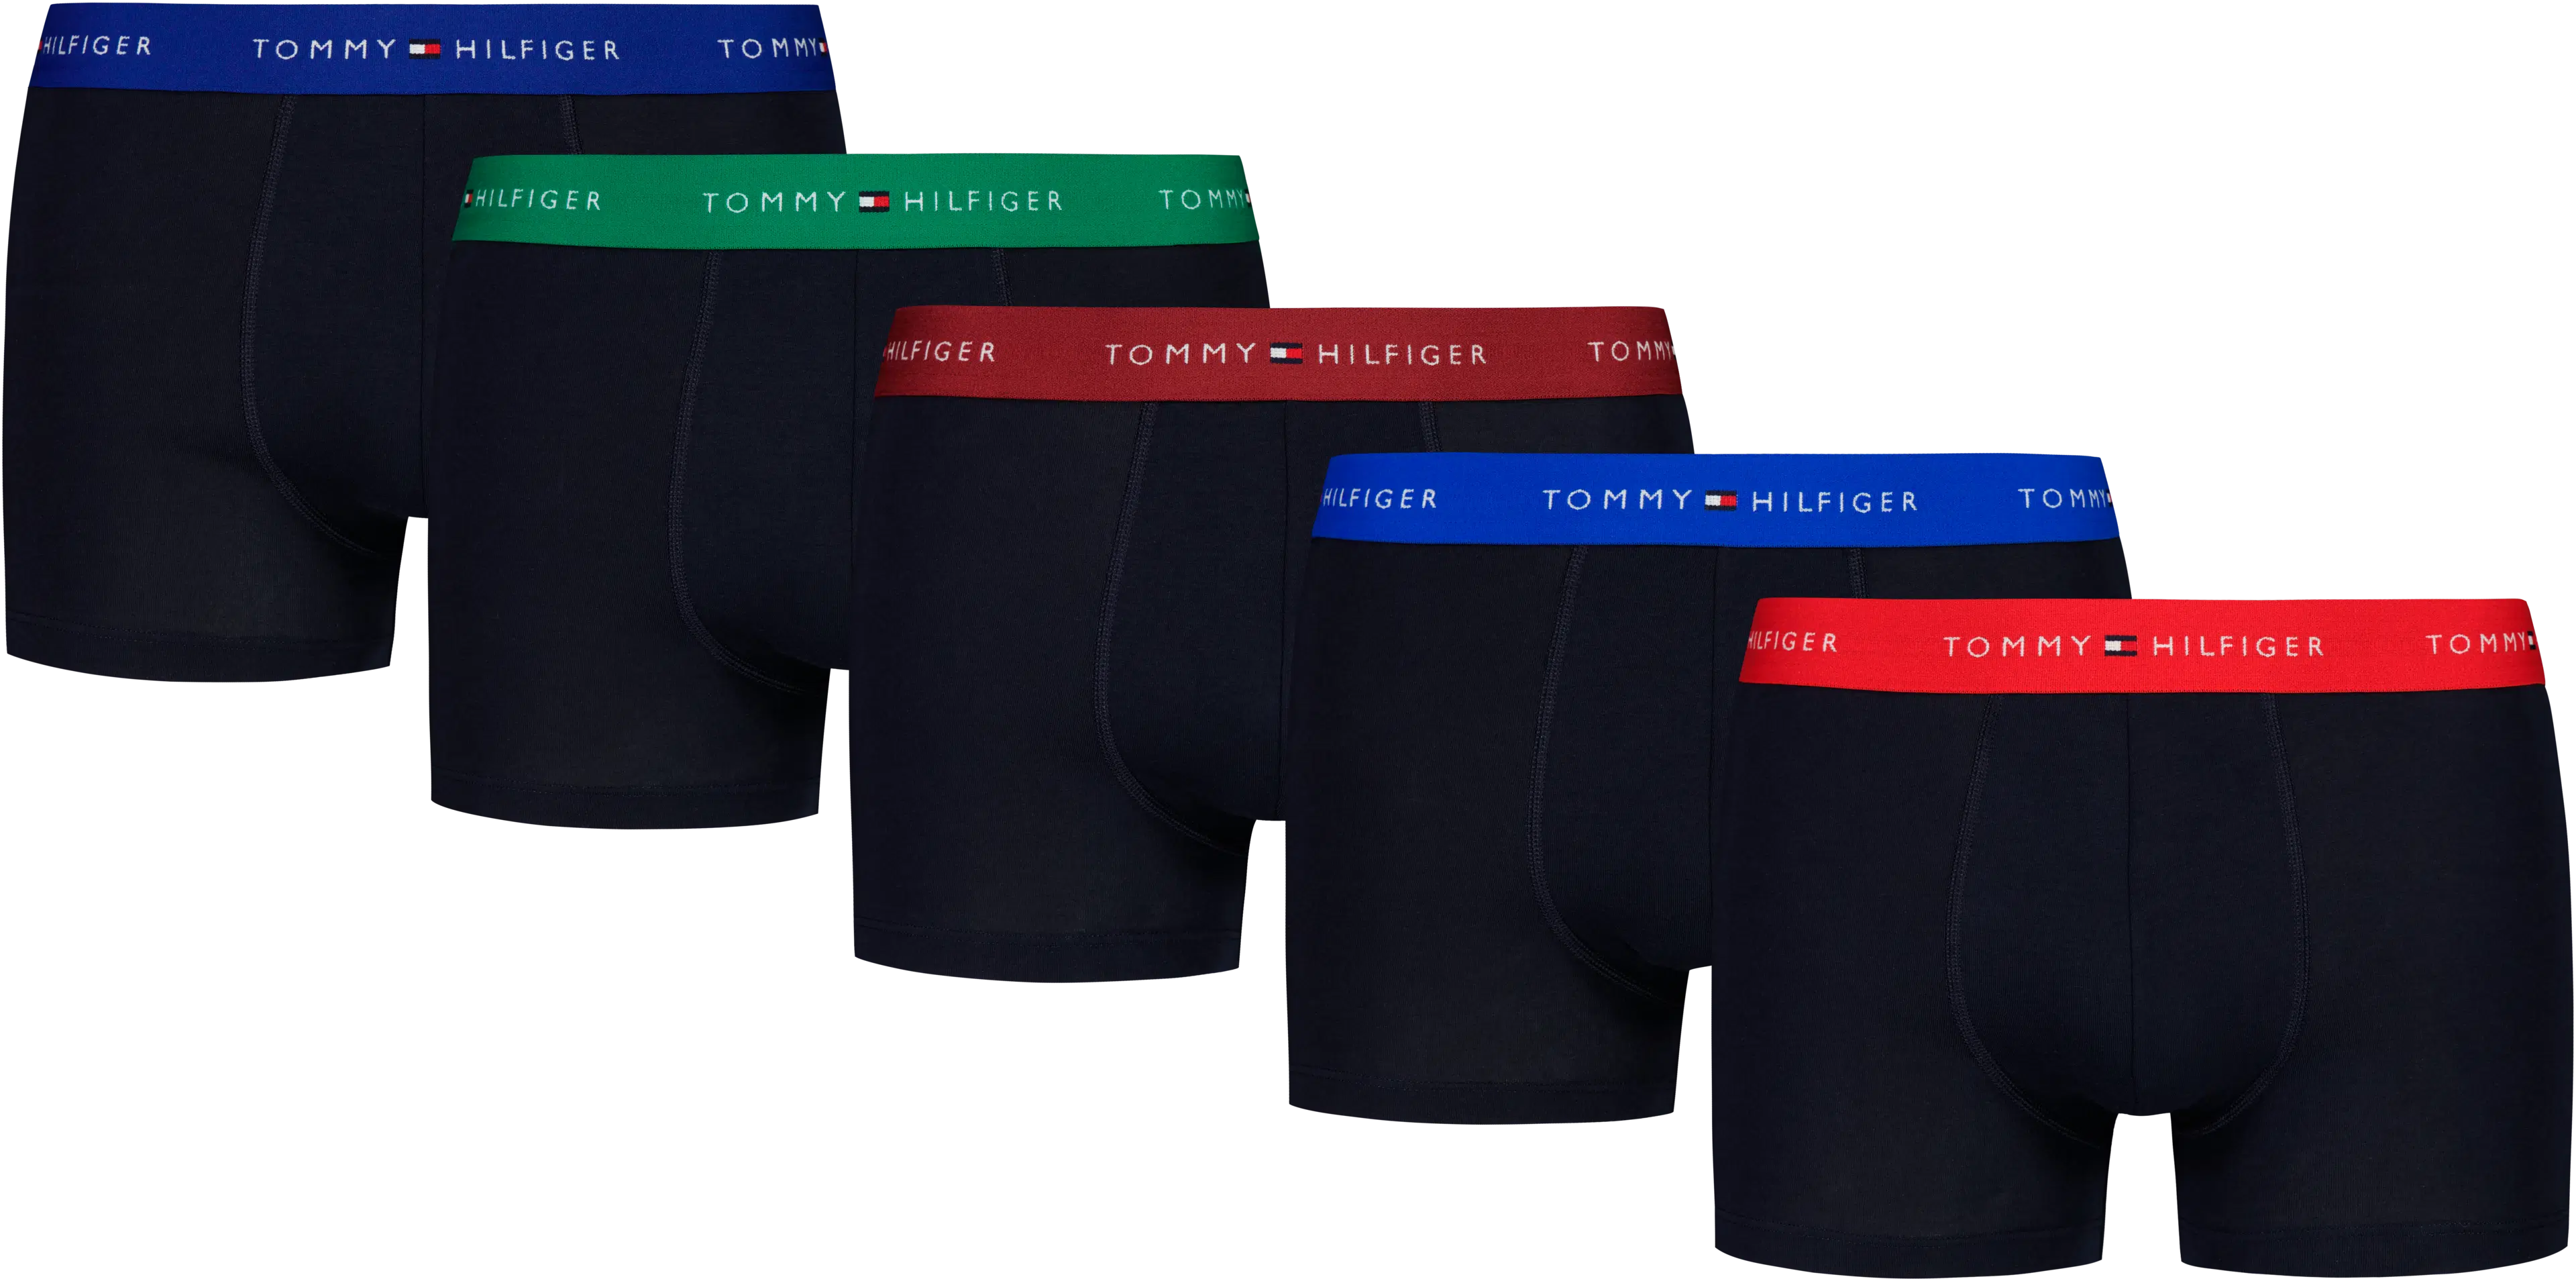 Tommy Hilfiger 5-pack trunk alushousut